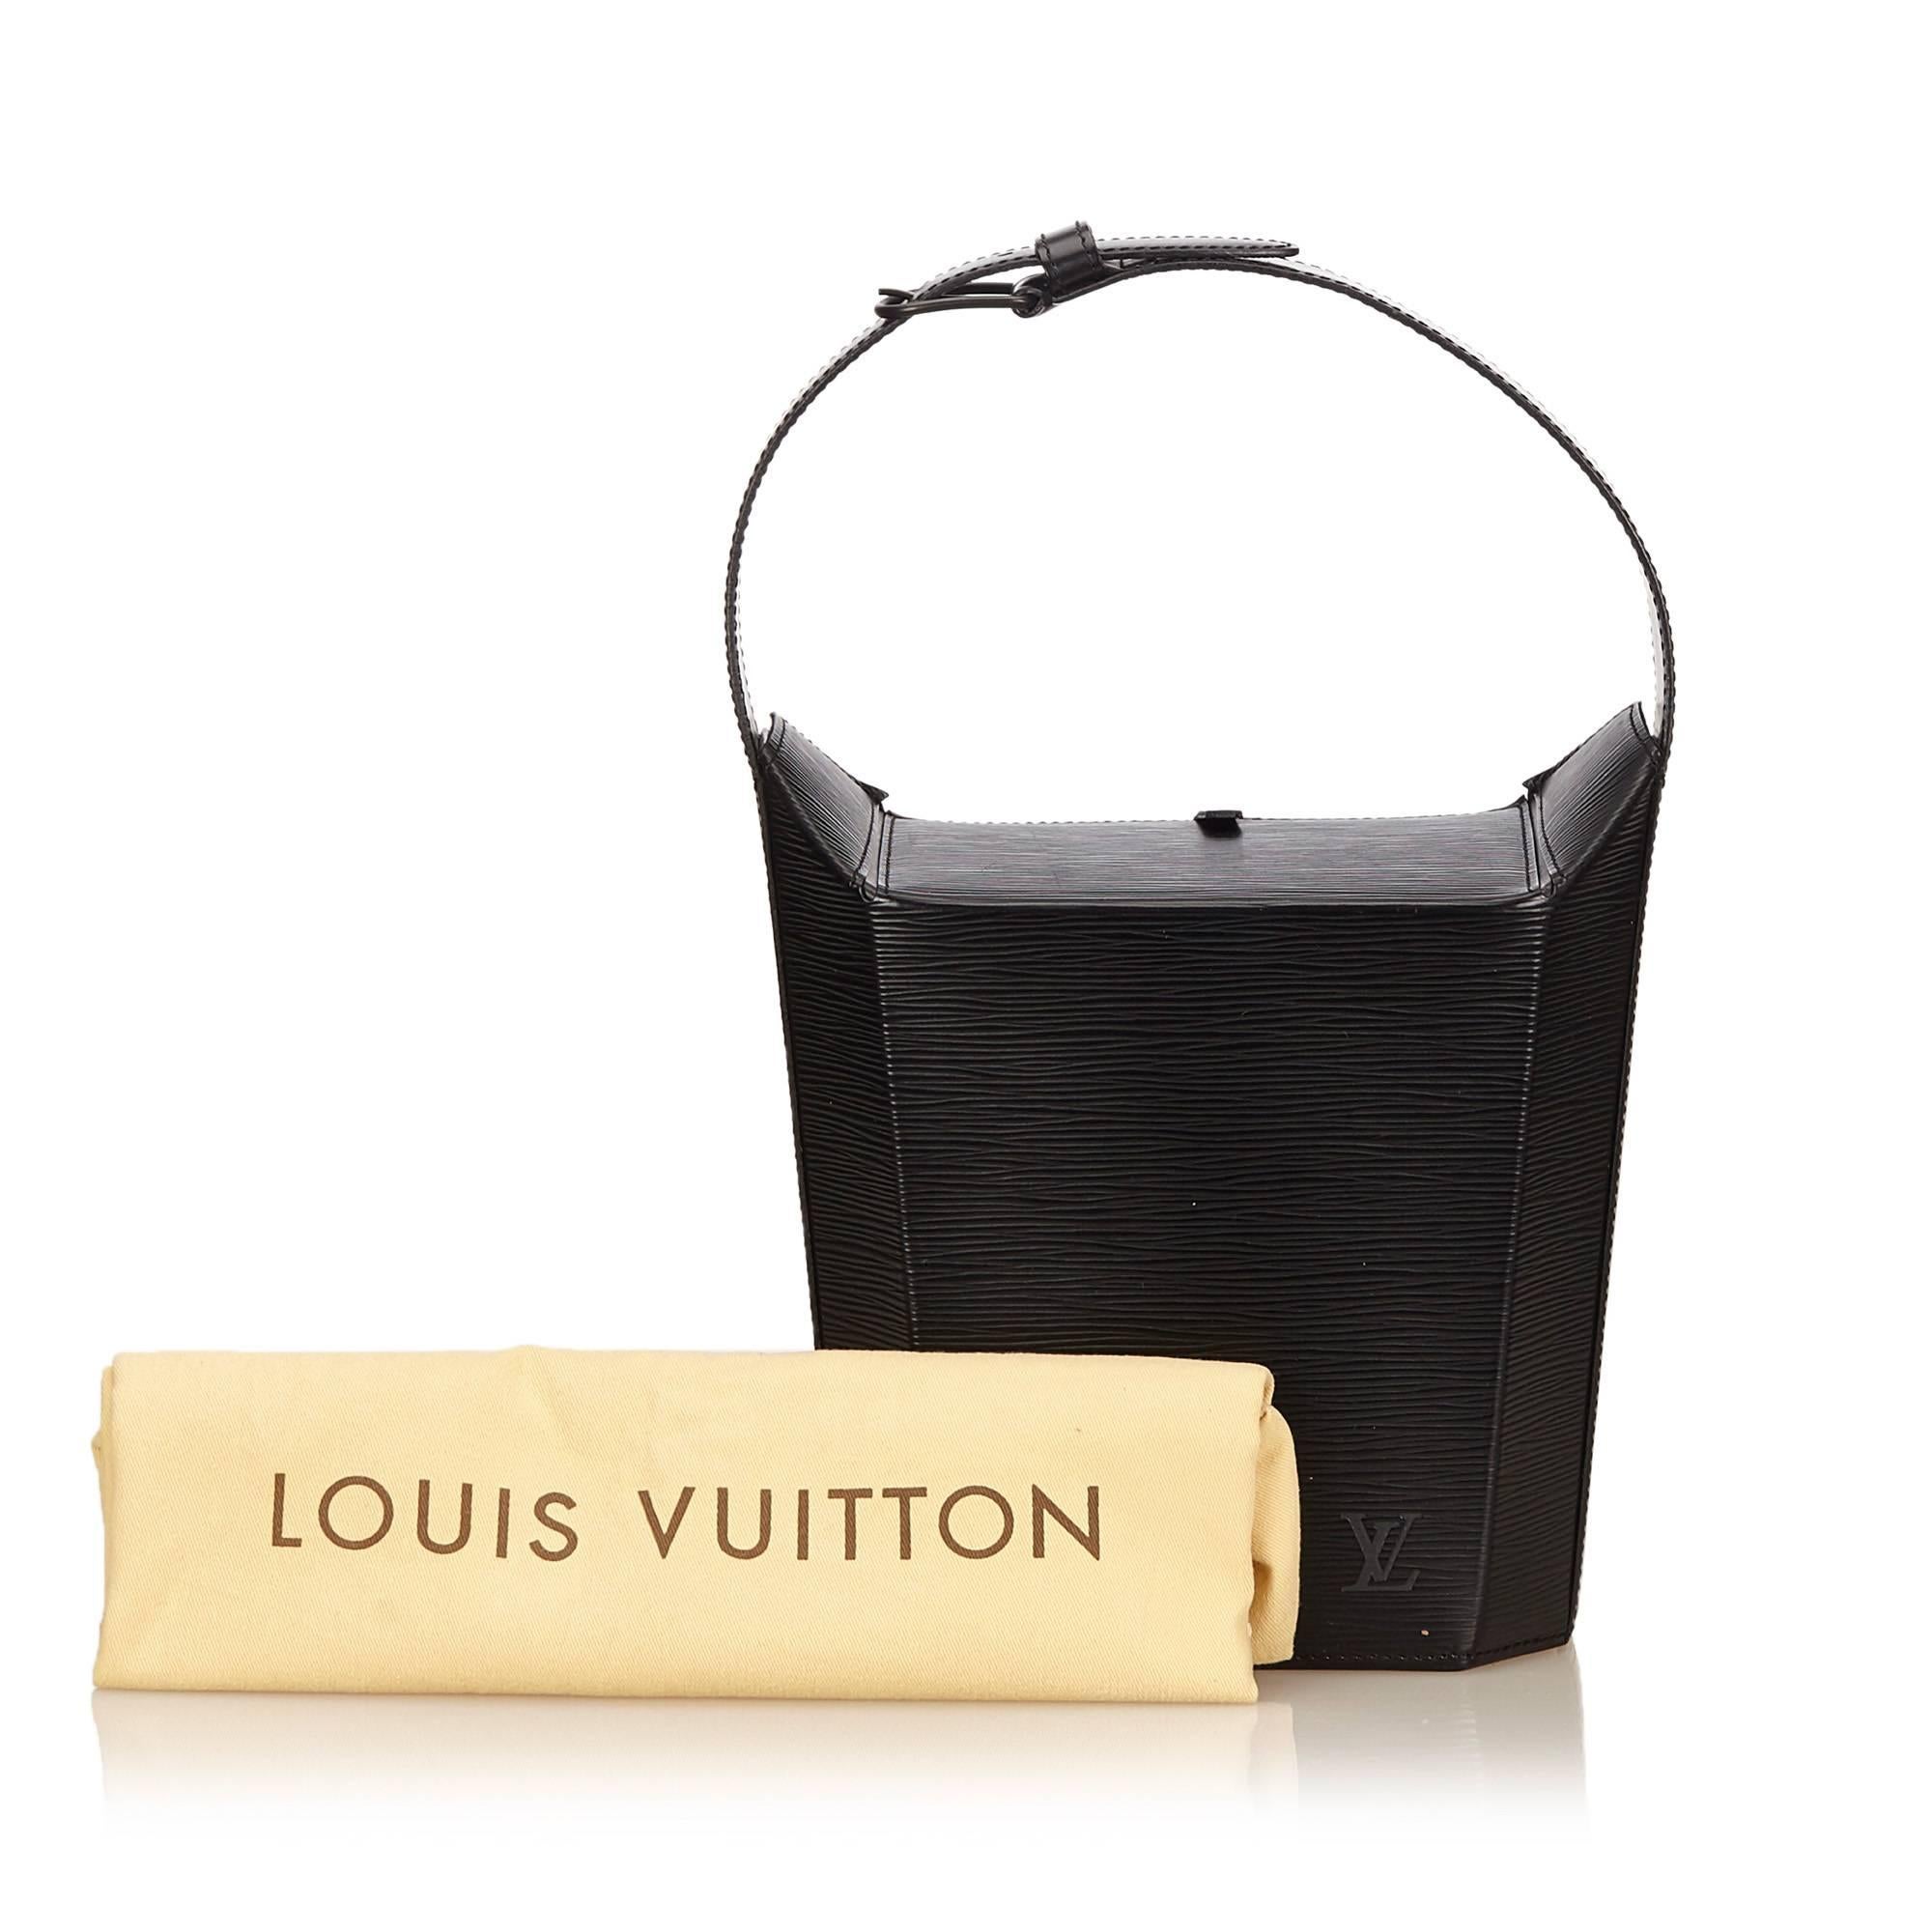 Women's Louis Vuitton Black Epi Leather Sac Seau Bag